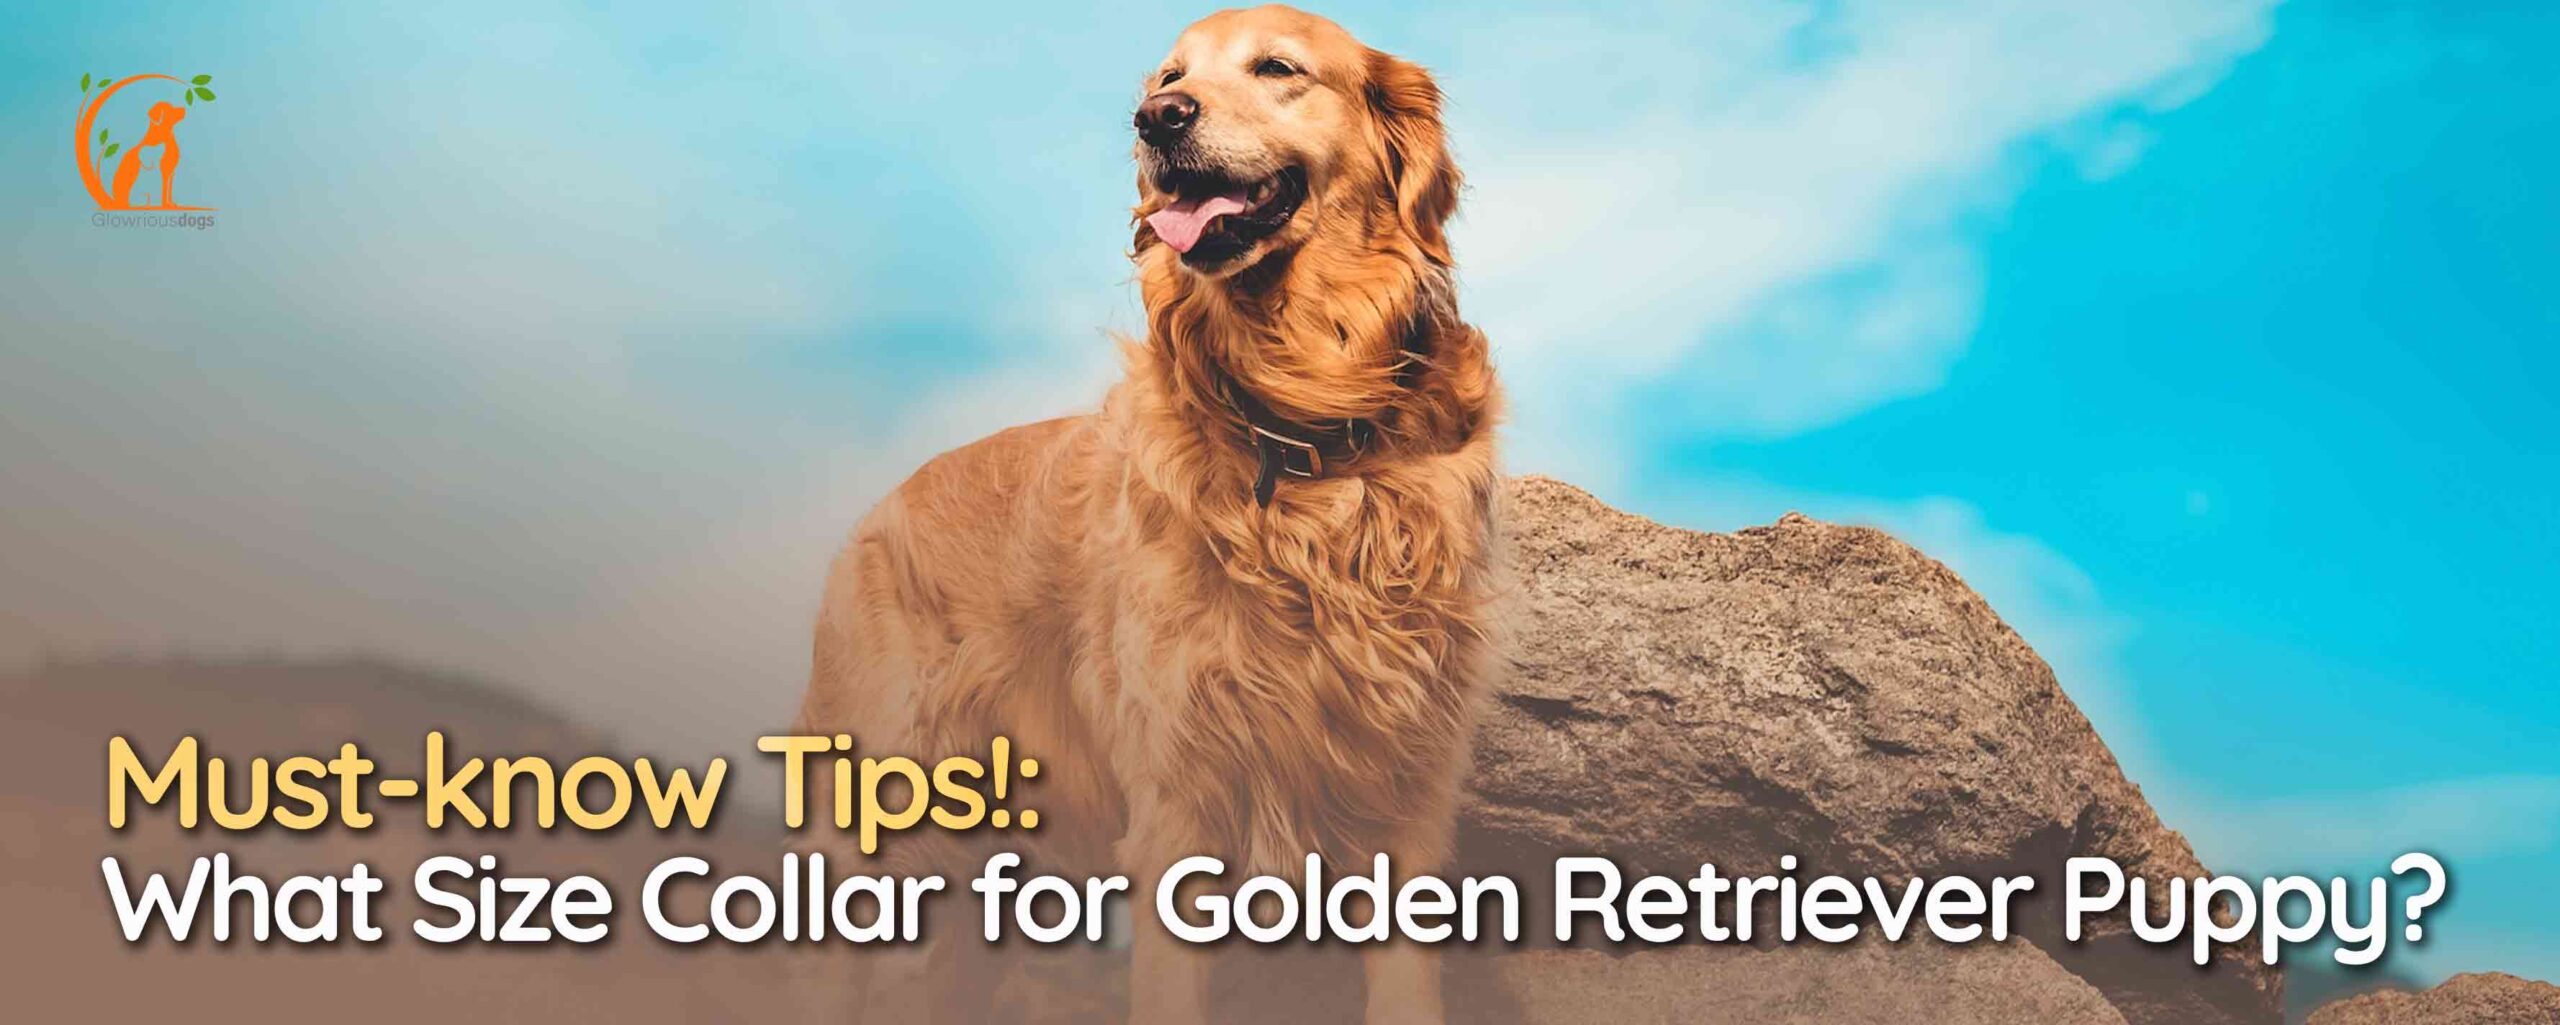 What Size Collar for Golden Retriever Puppy